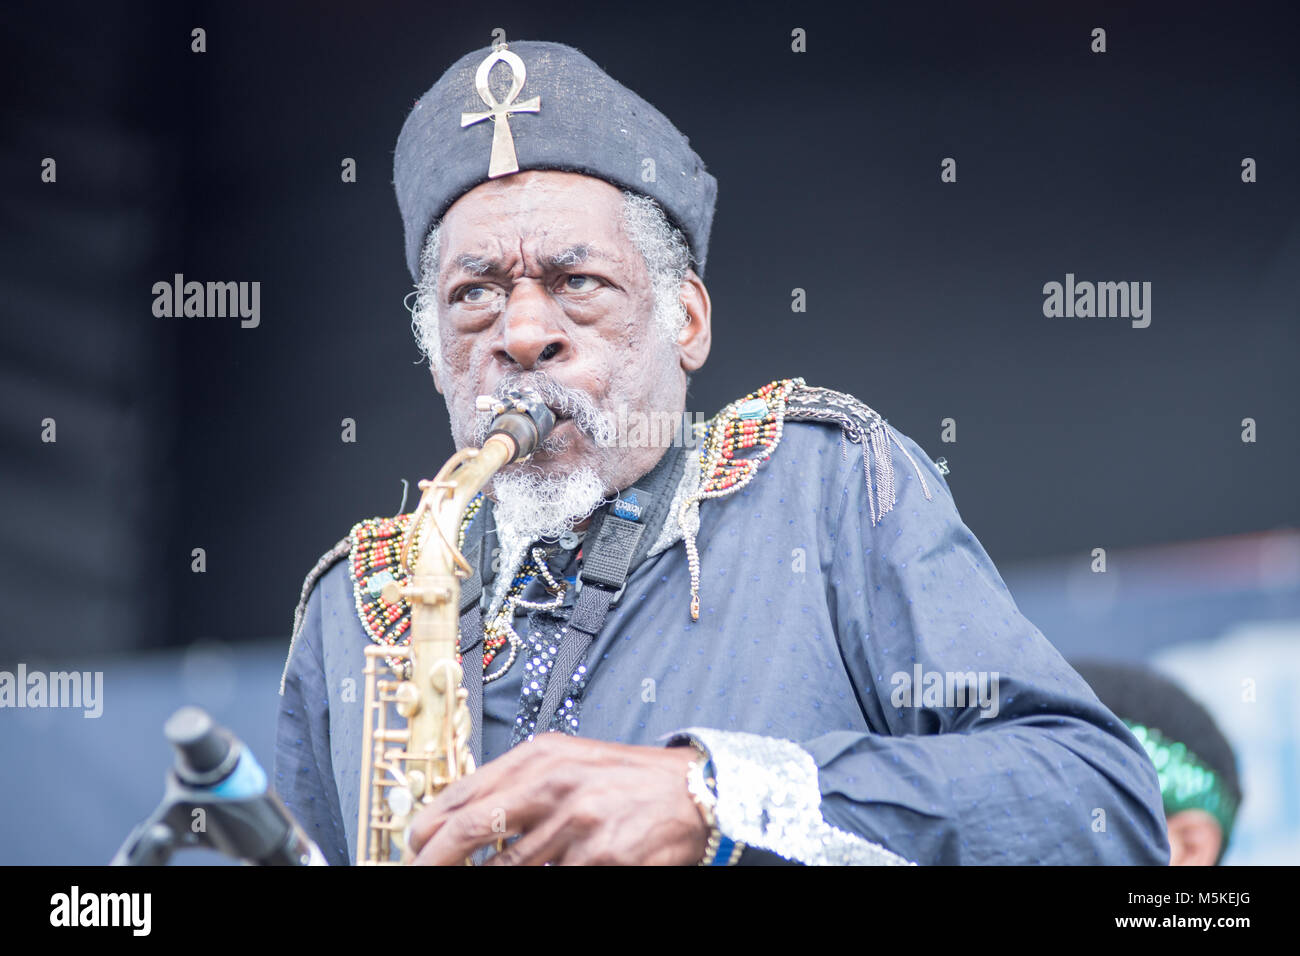 Member from the musical group, Sun Ra Arkestra, playing a saxophone, Greensboro, North Carolina. Stock Photo